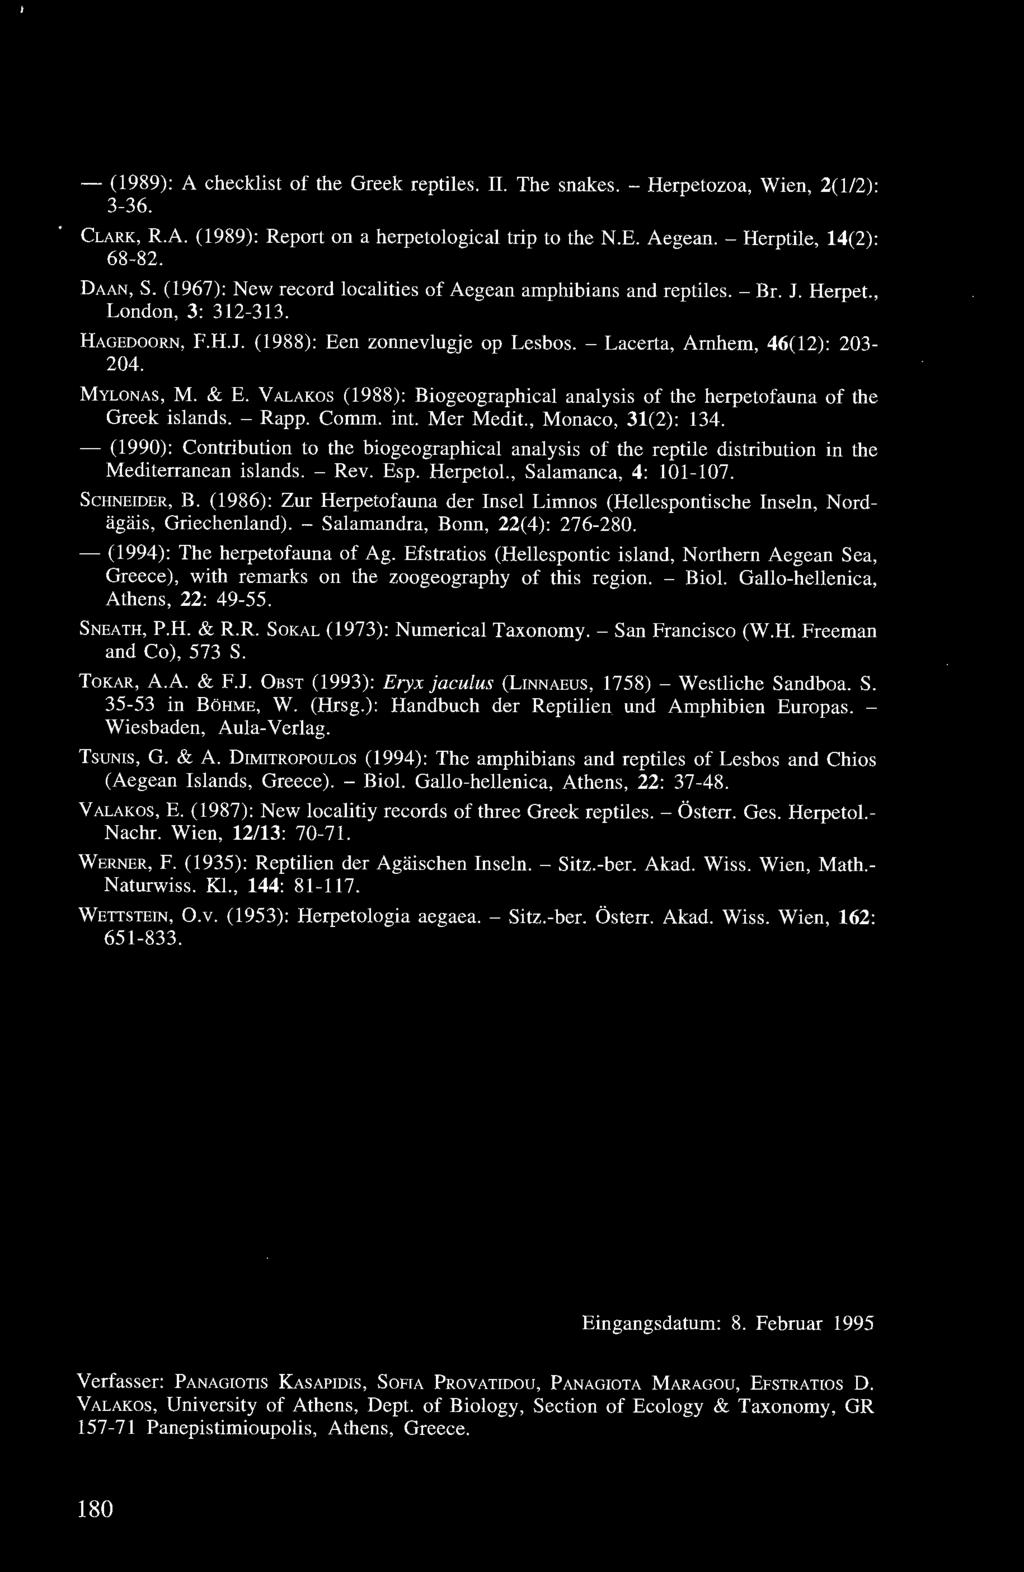 MYLONAS, M. & E. VALAKOS (1988): Biogeographical analysis of the herpetofauna of the Greek islands. - Rapp. Comm. int. Mer Medit., Monaco, 31(2): 134.